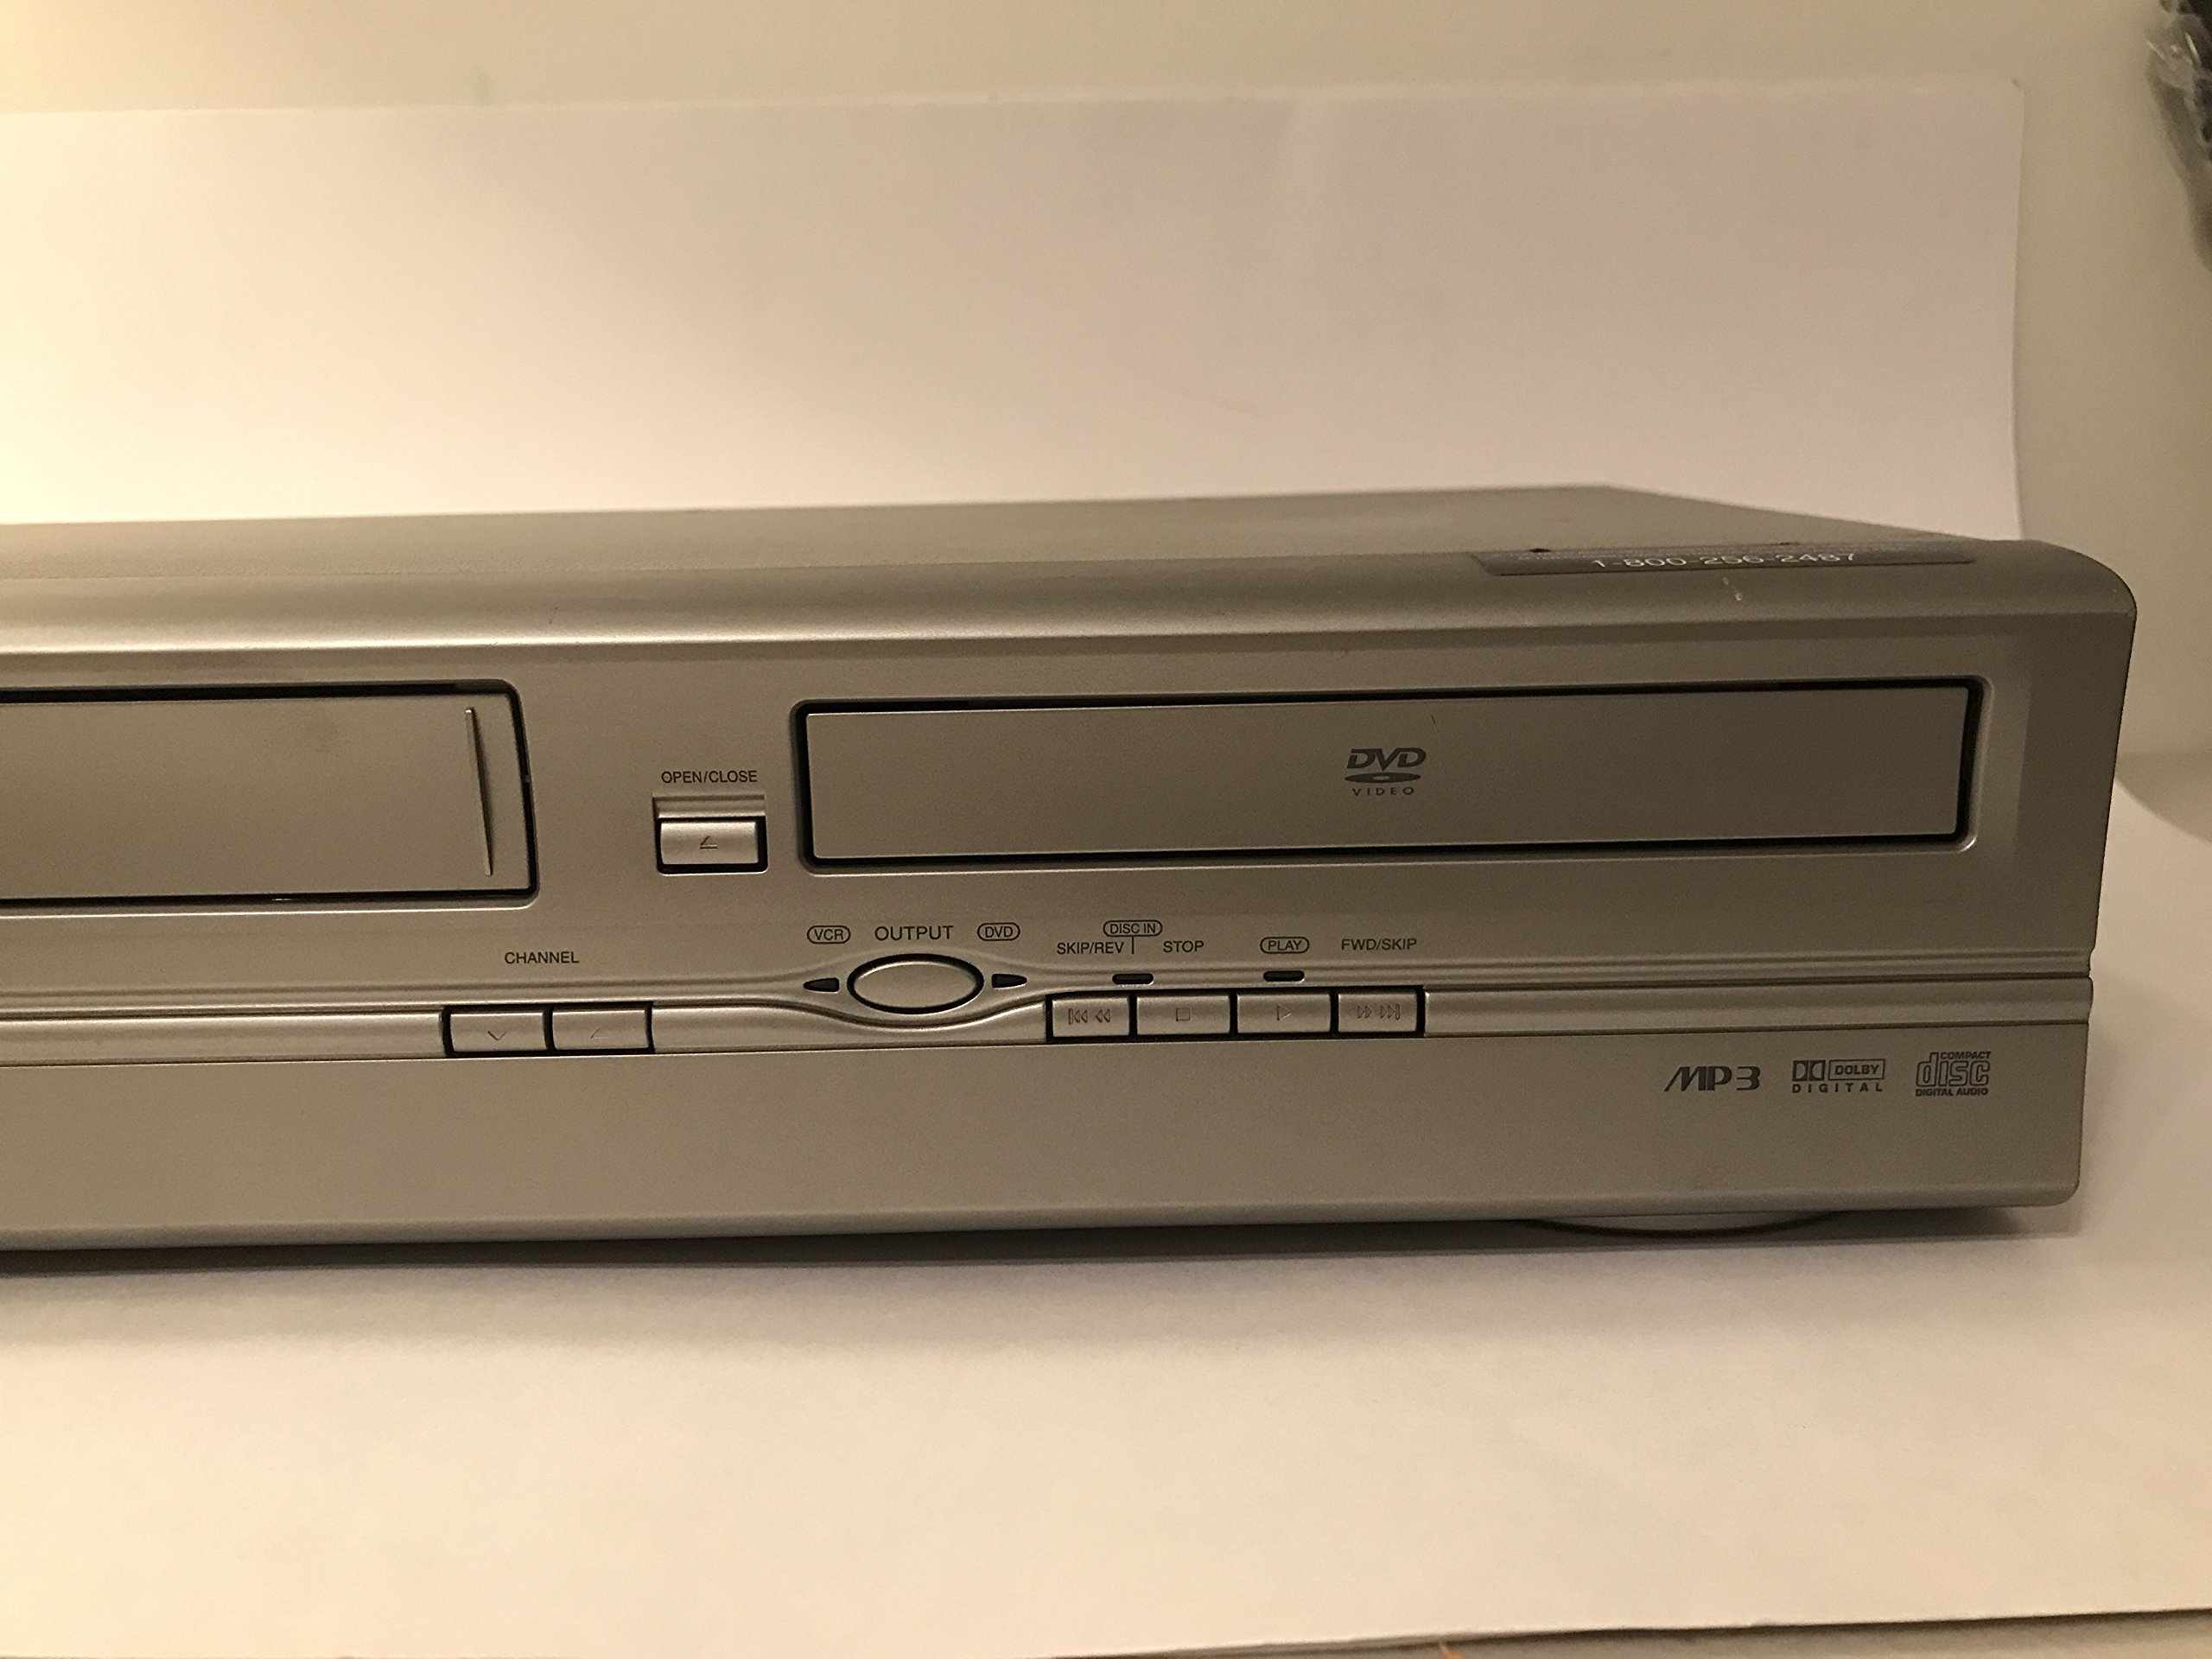 Emerson EWD2204 DVD/VCR Combo DVD Video Cassette Recorder Player 4 Head 19 Micron Head